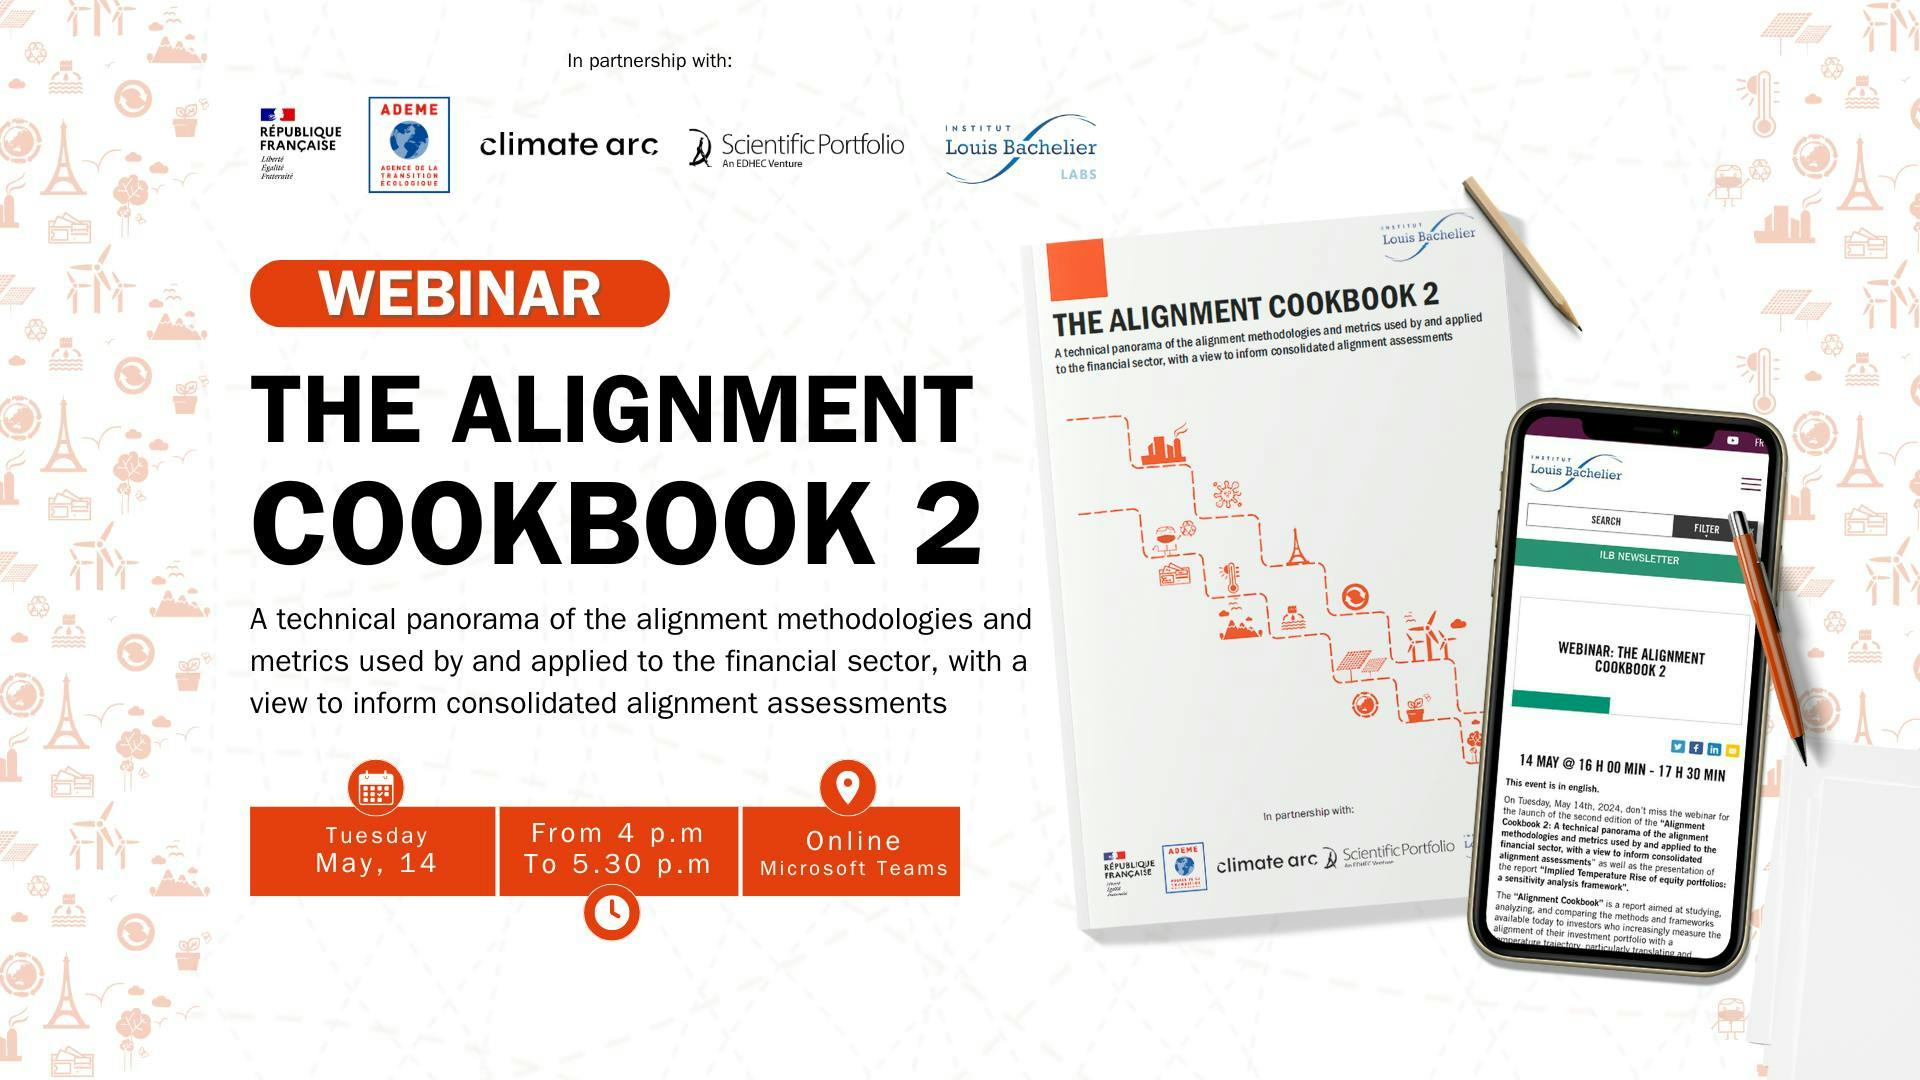 WEBINAR The Alignment Cookbook 2